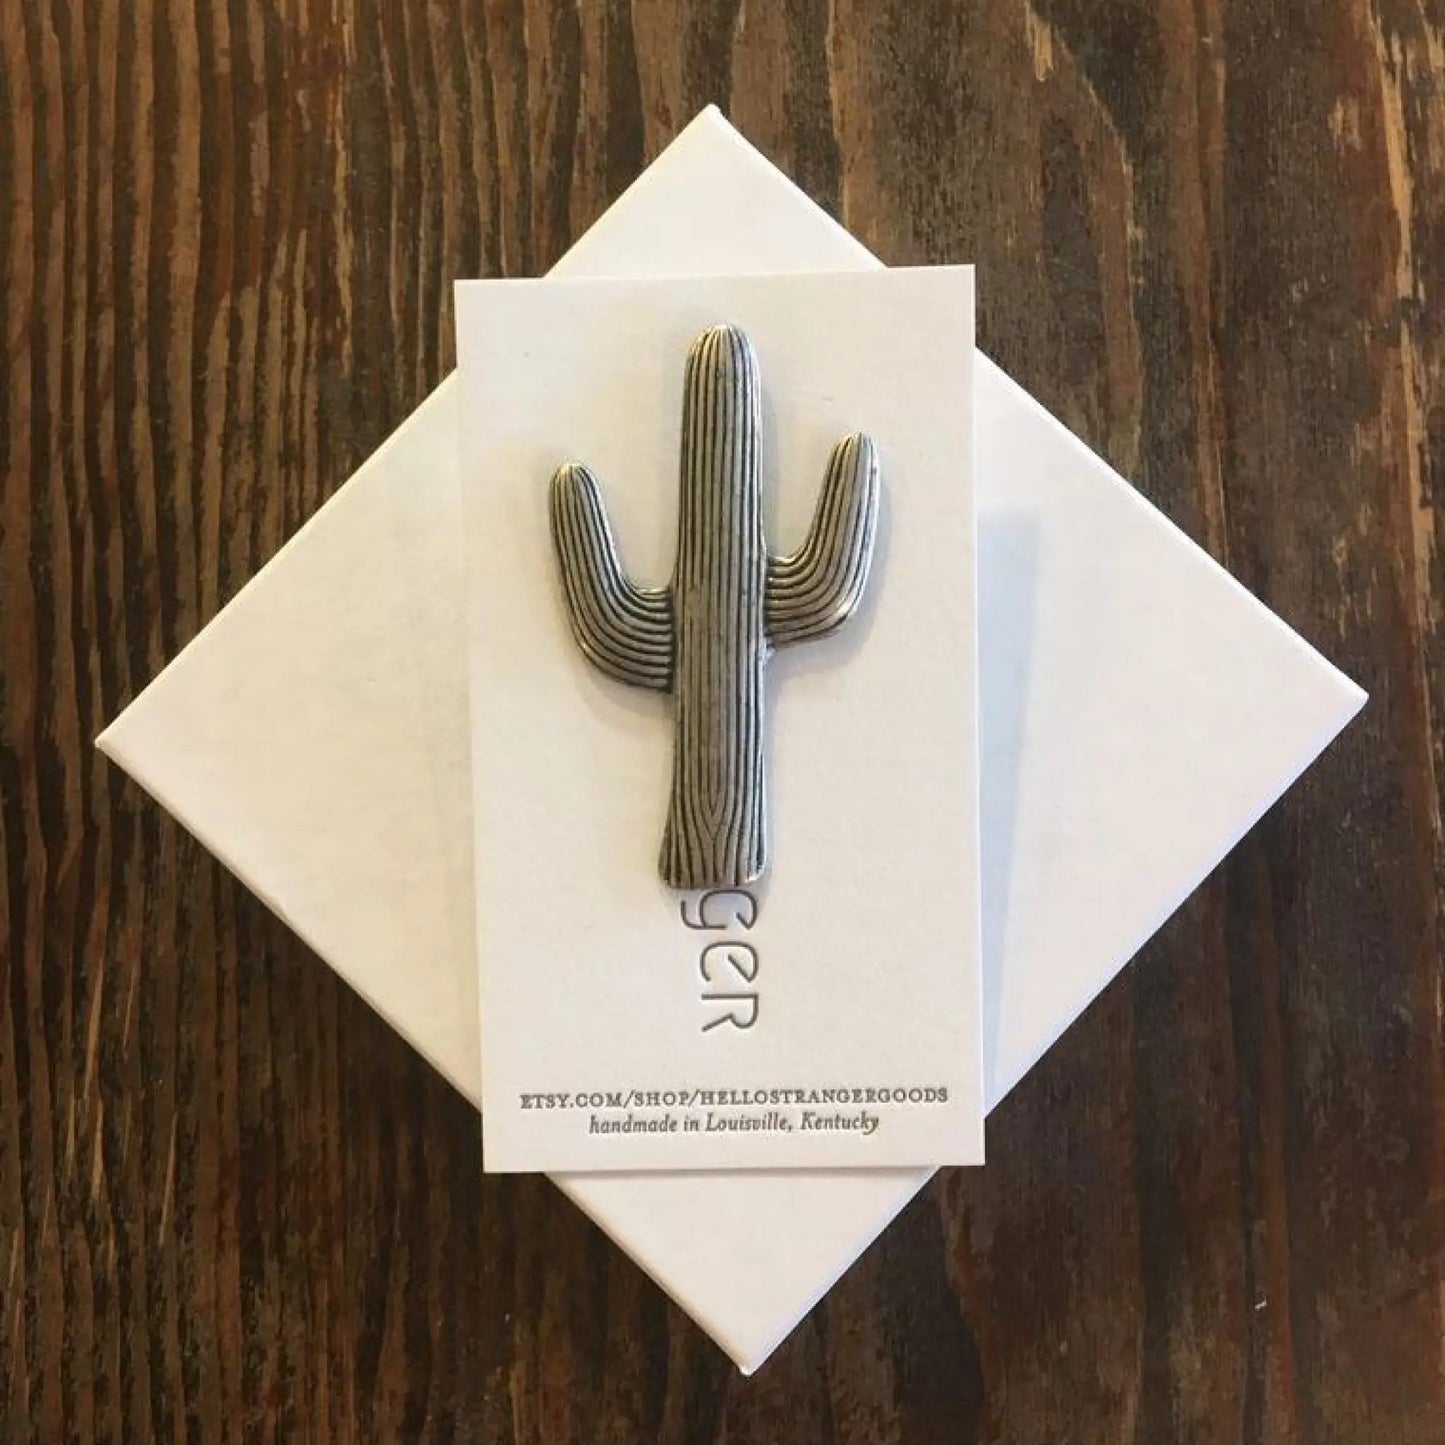 Giant Cactus Pin - Pins